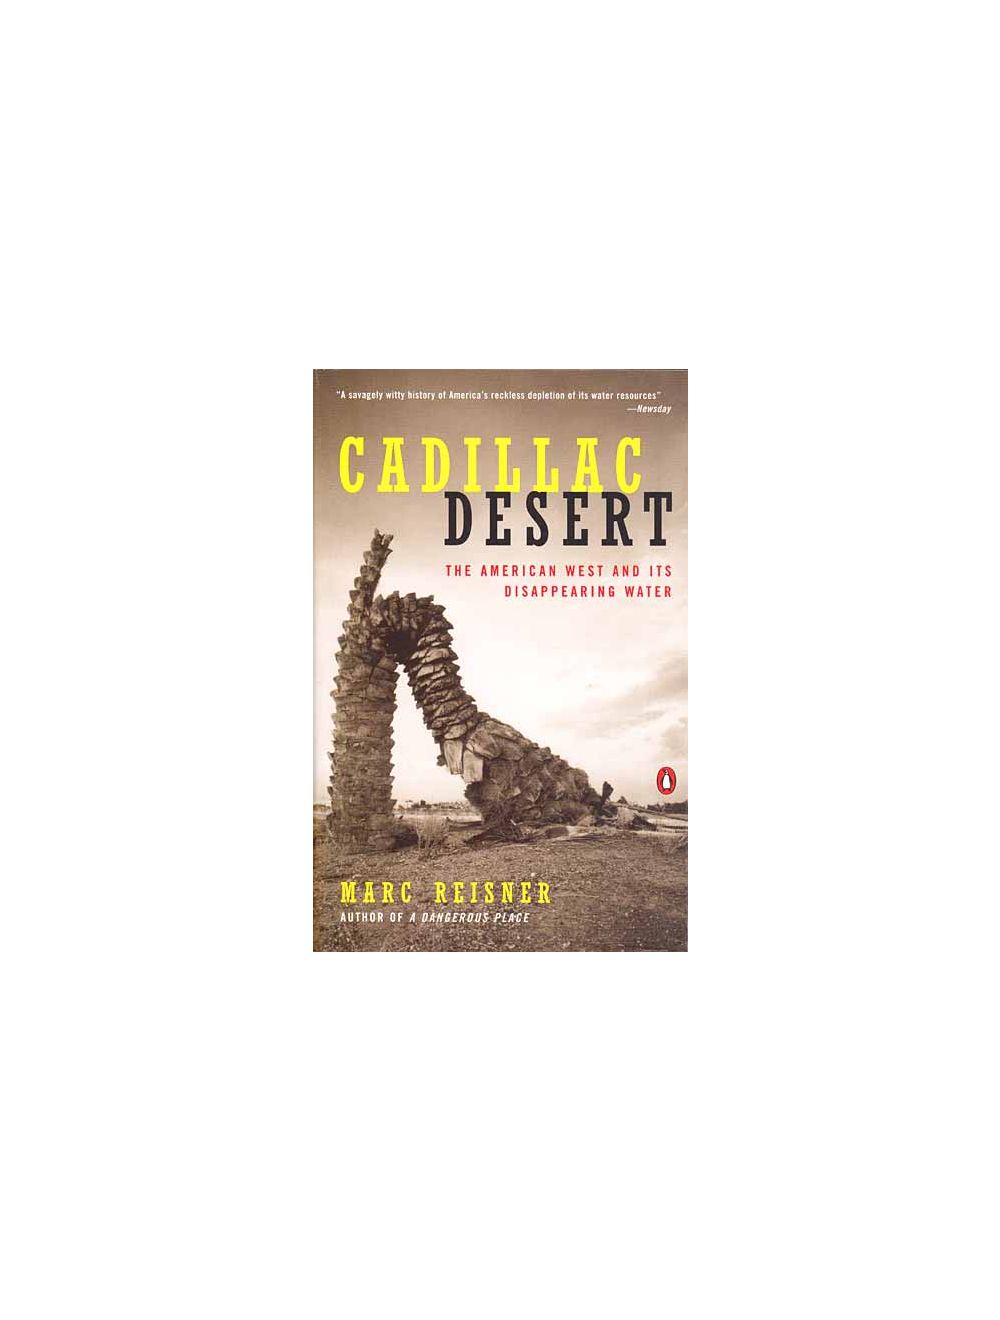 book cadillac desert